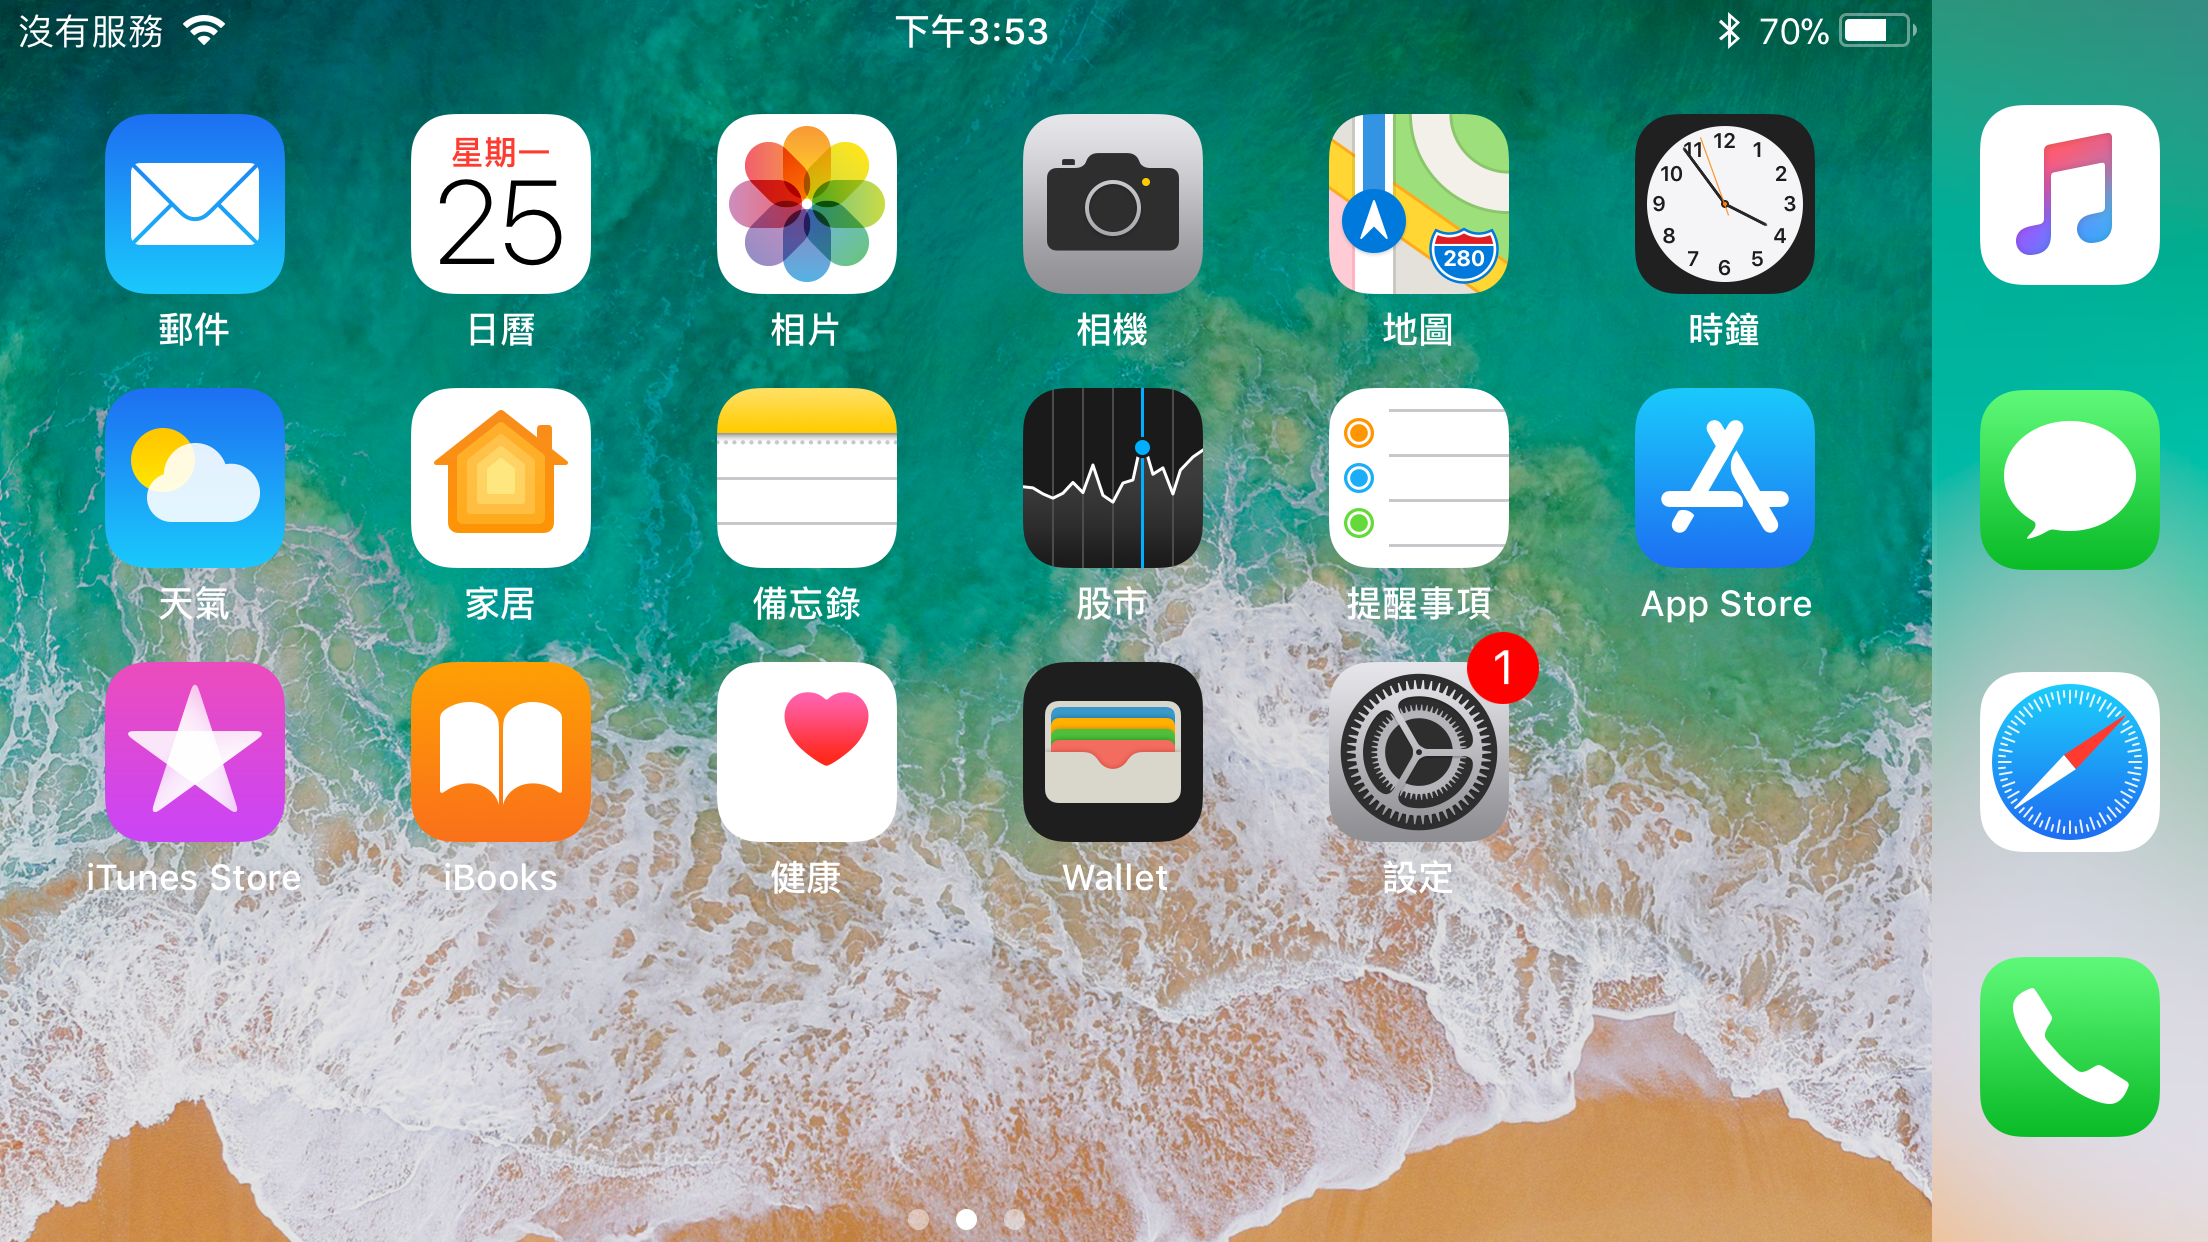 iphone lock screen landscape 01